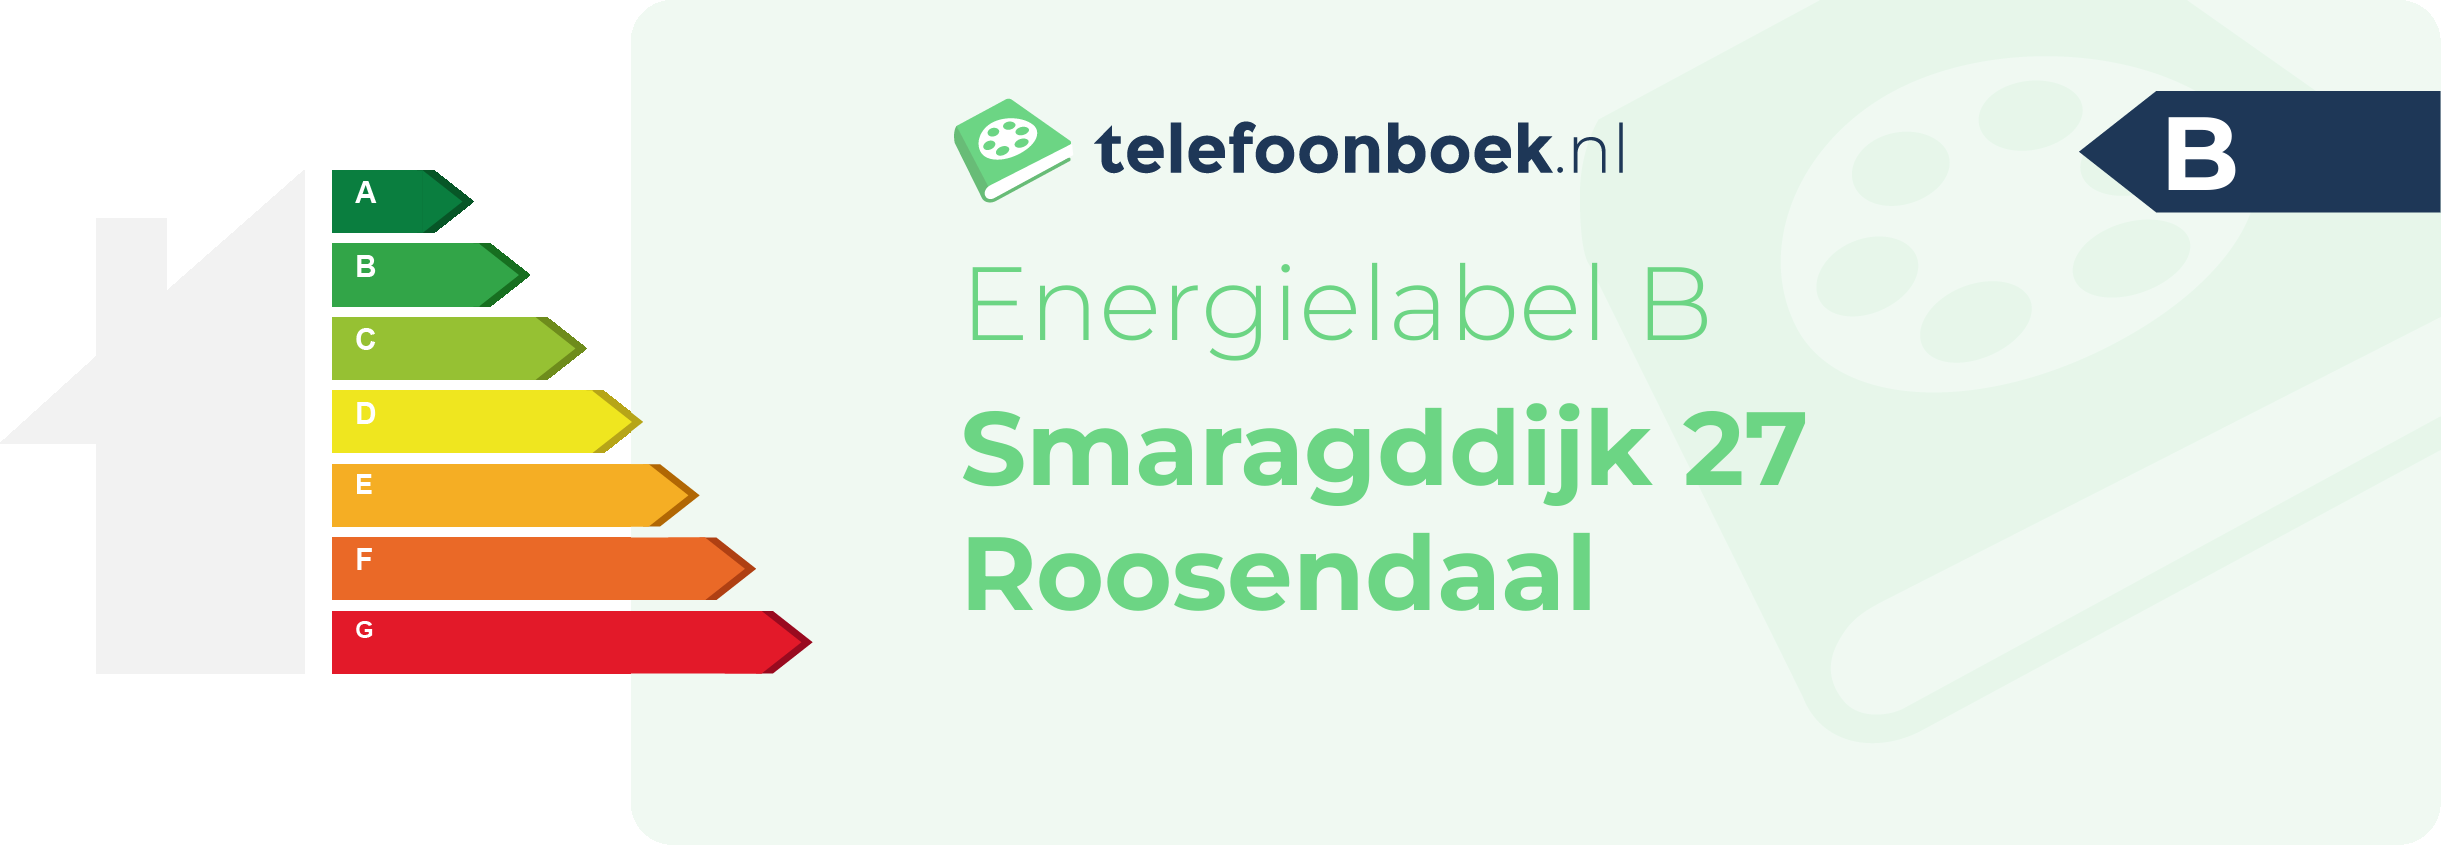 Energielabel Smaragddijk 27 Roosendaal